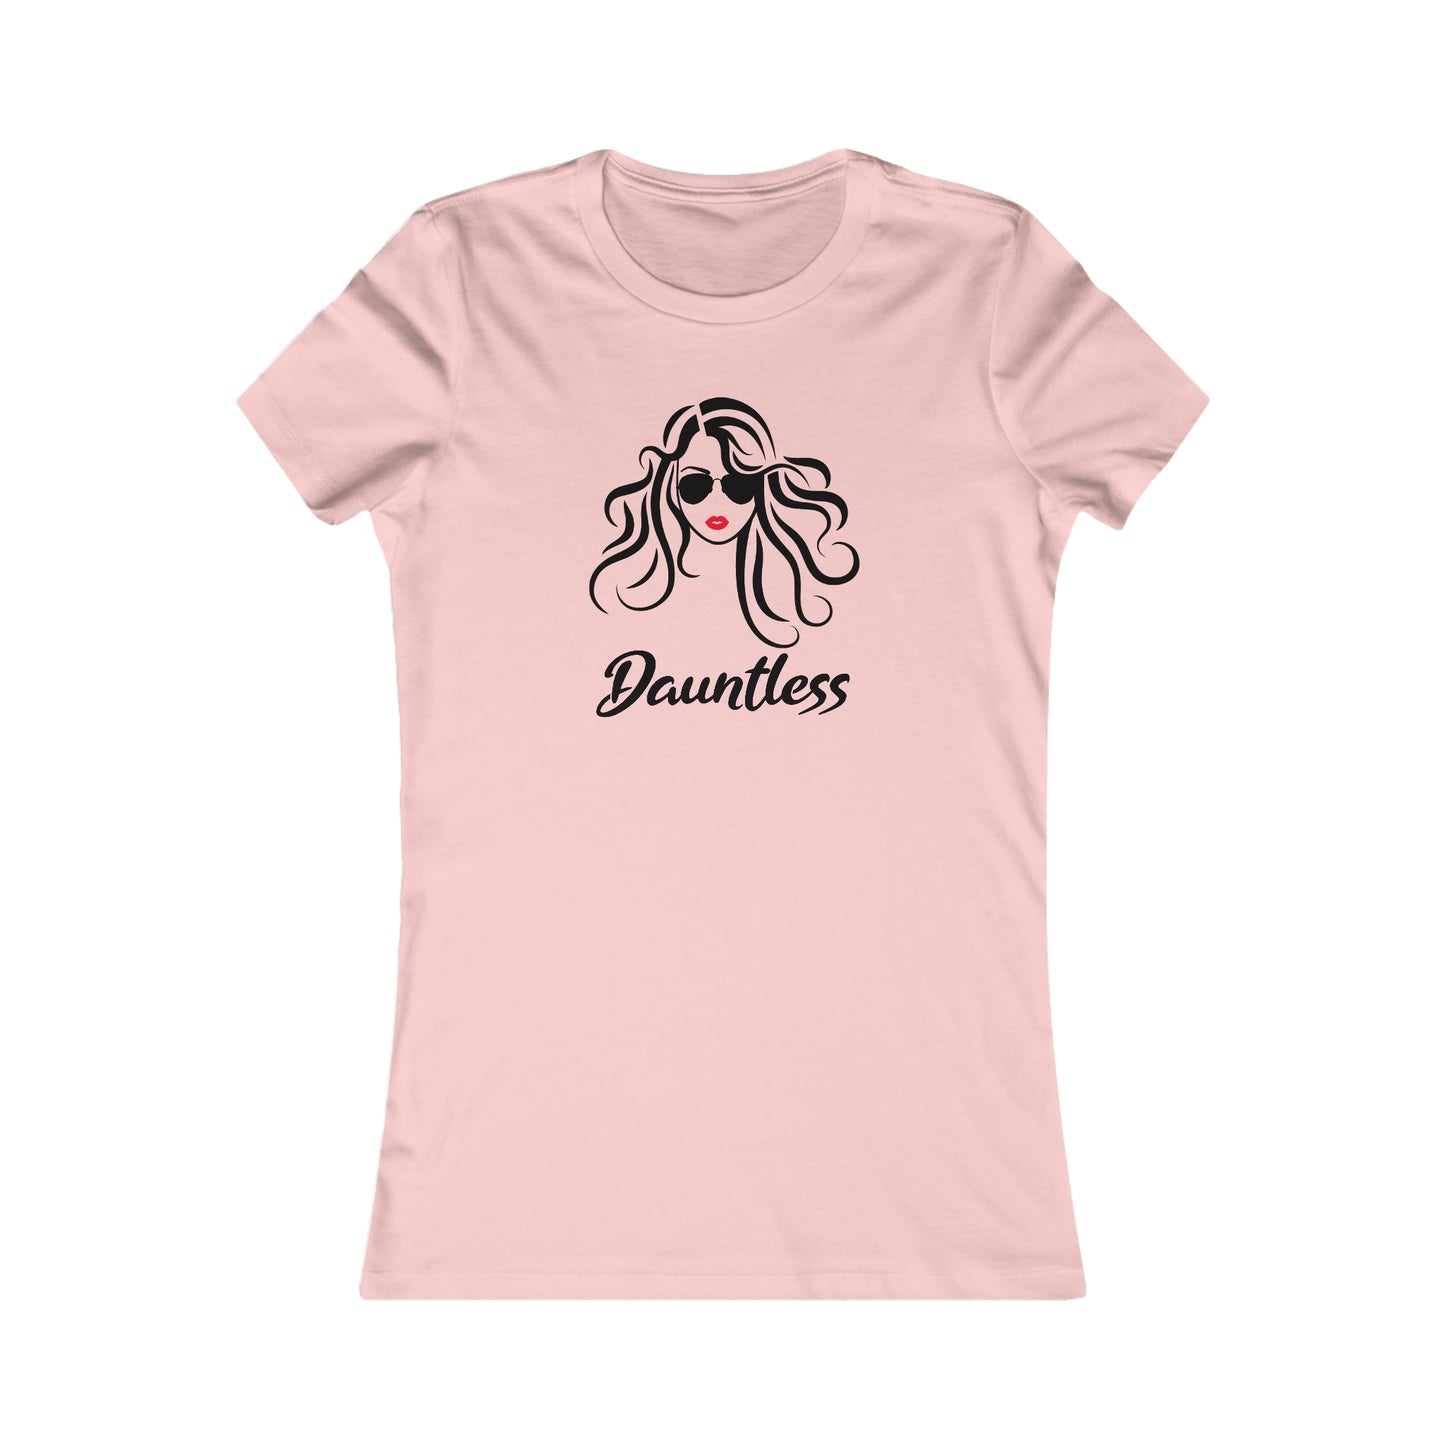 Dauntless T-Shirt For Brave TShirt For Tough Girl T Shirt For Fearless Woman T-Shirt For Determined Shirt For Girls TShirt For Gift